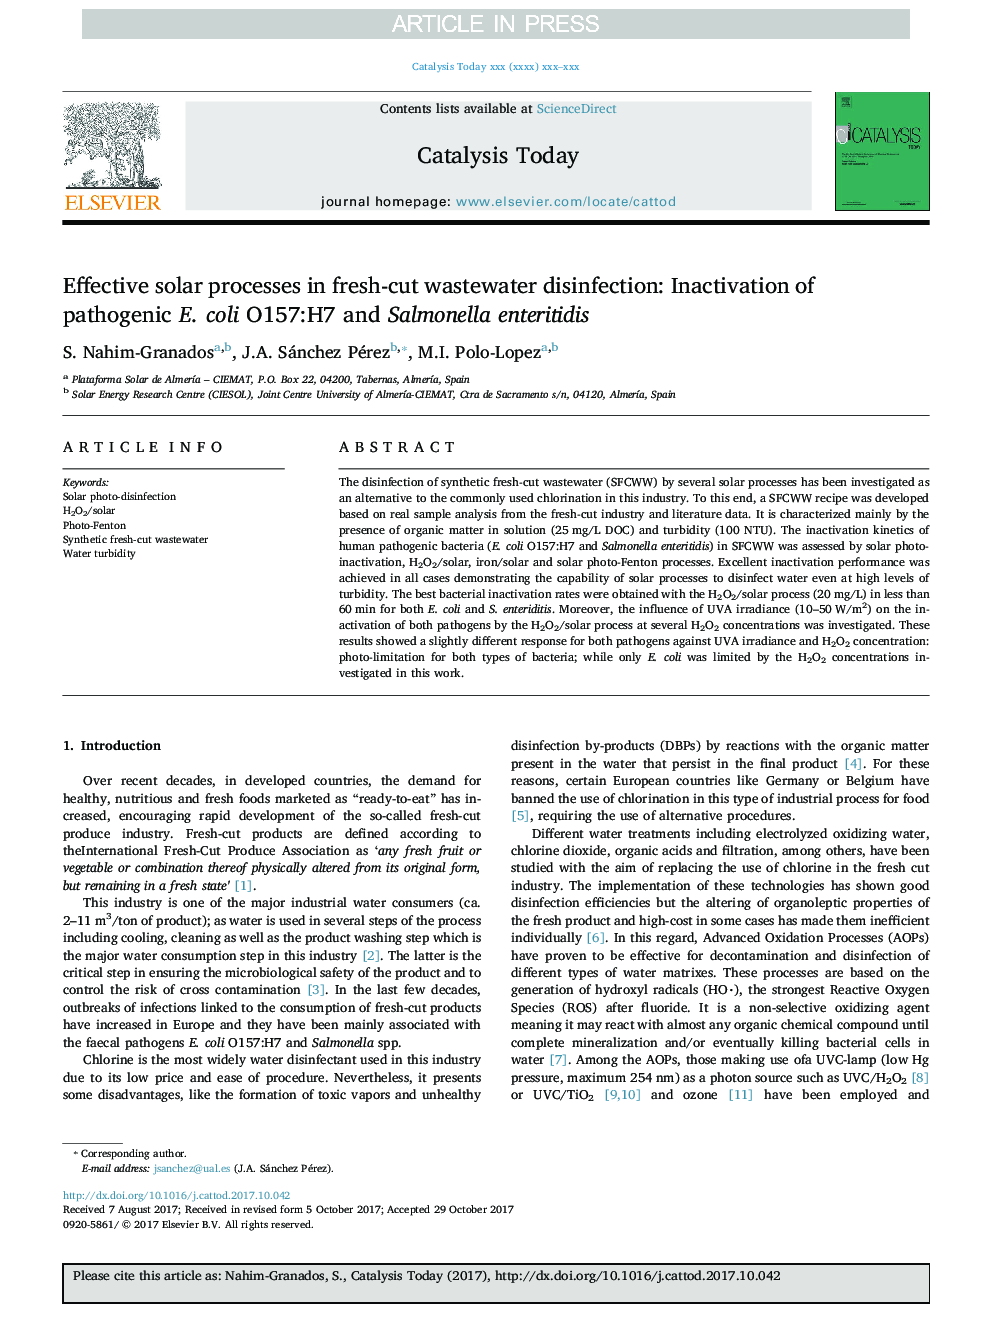 Effective solar processes in fresh-cut wastewater disinfection: Inactivation of pathogenic E. coli O157:H7 and Salmonella enteritidis